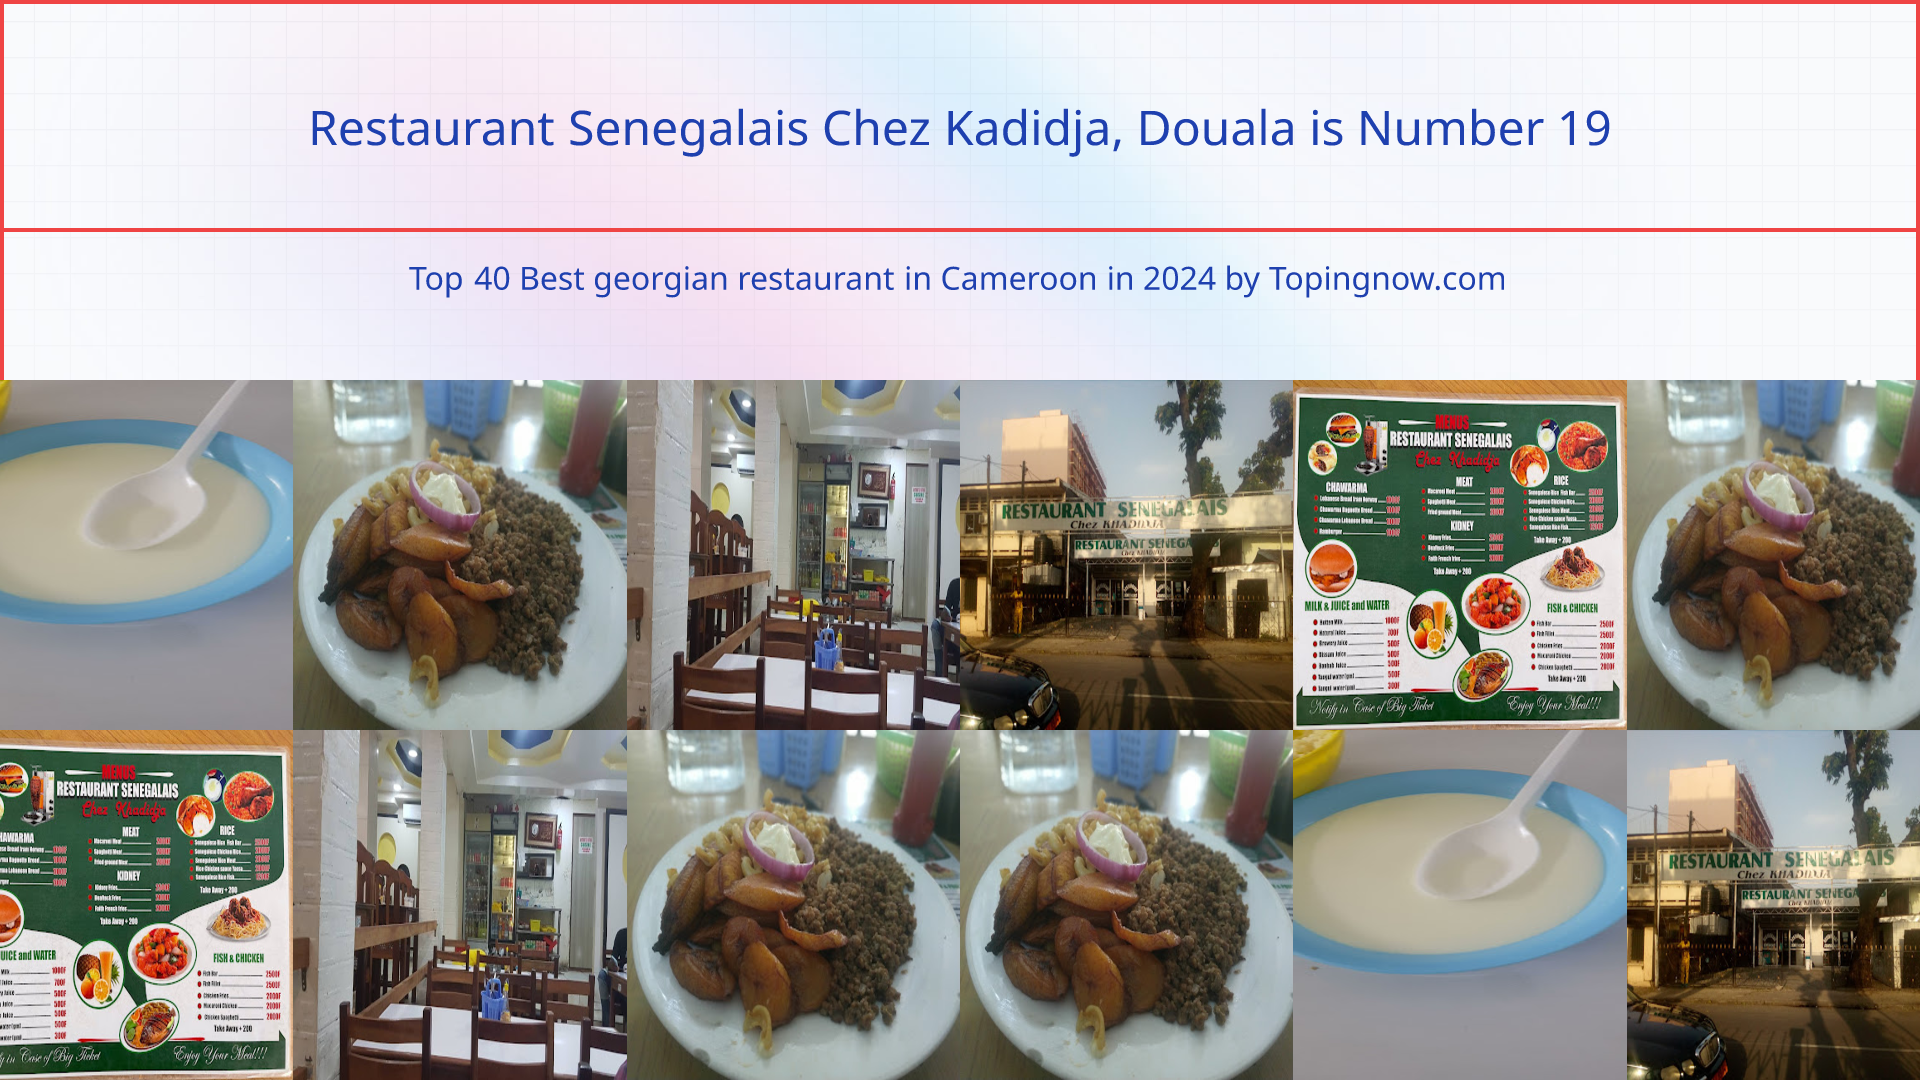 Restaurant Senegalais Chez Kadidja, Douala: Top 40 Best georgian restaurant in Cameroon in 2024